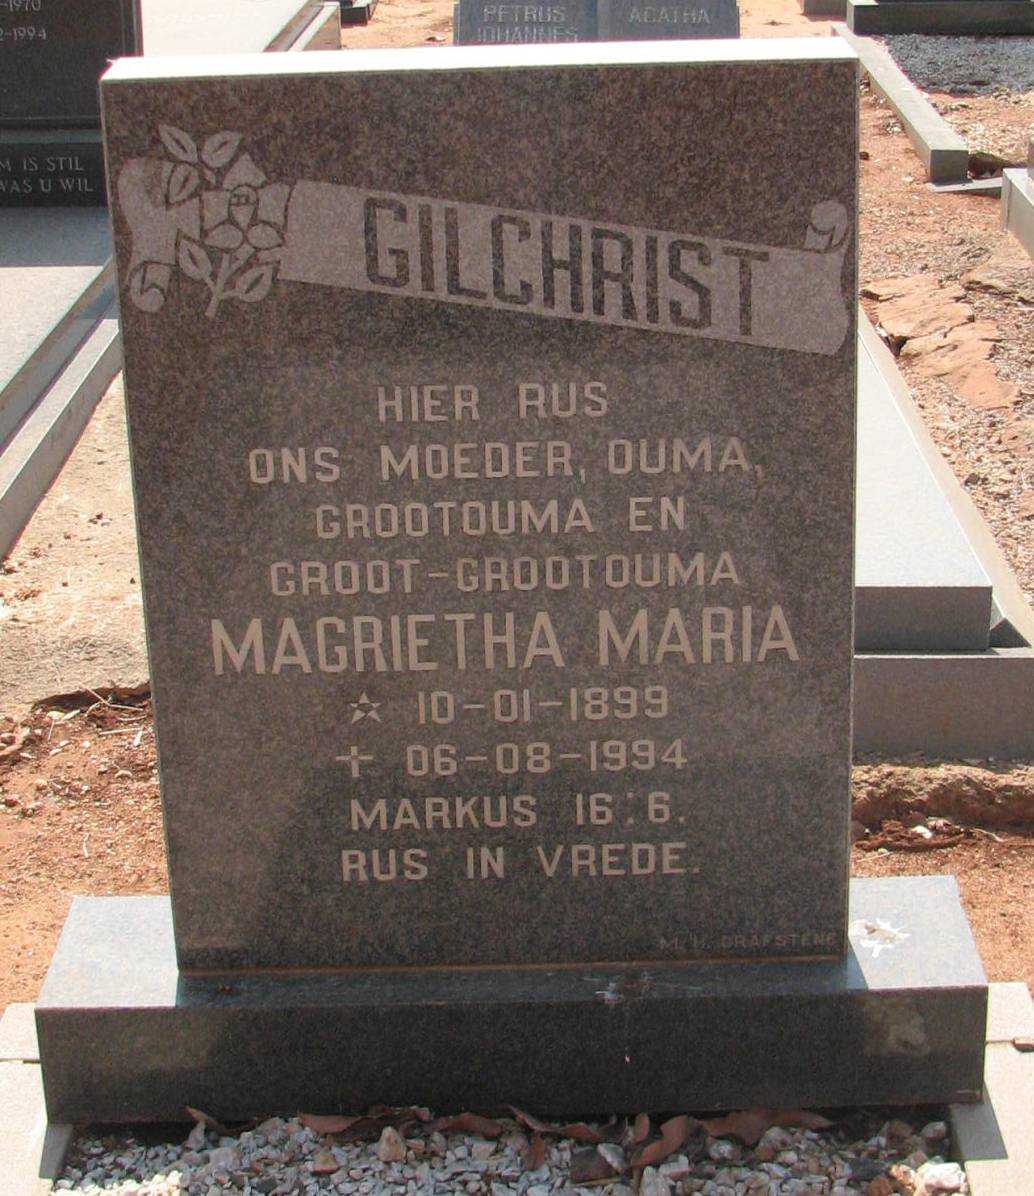 GILCHRIST Magrietha Maria 1899-1994